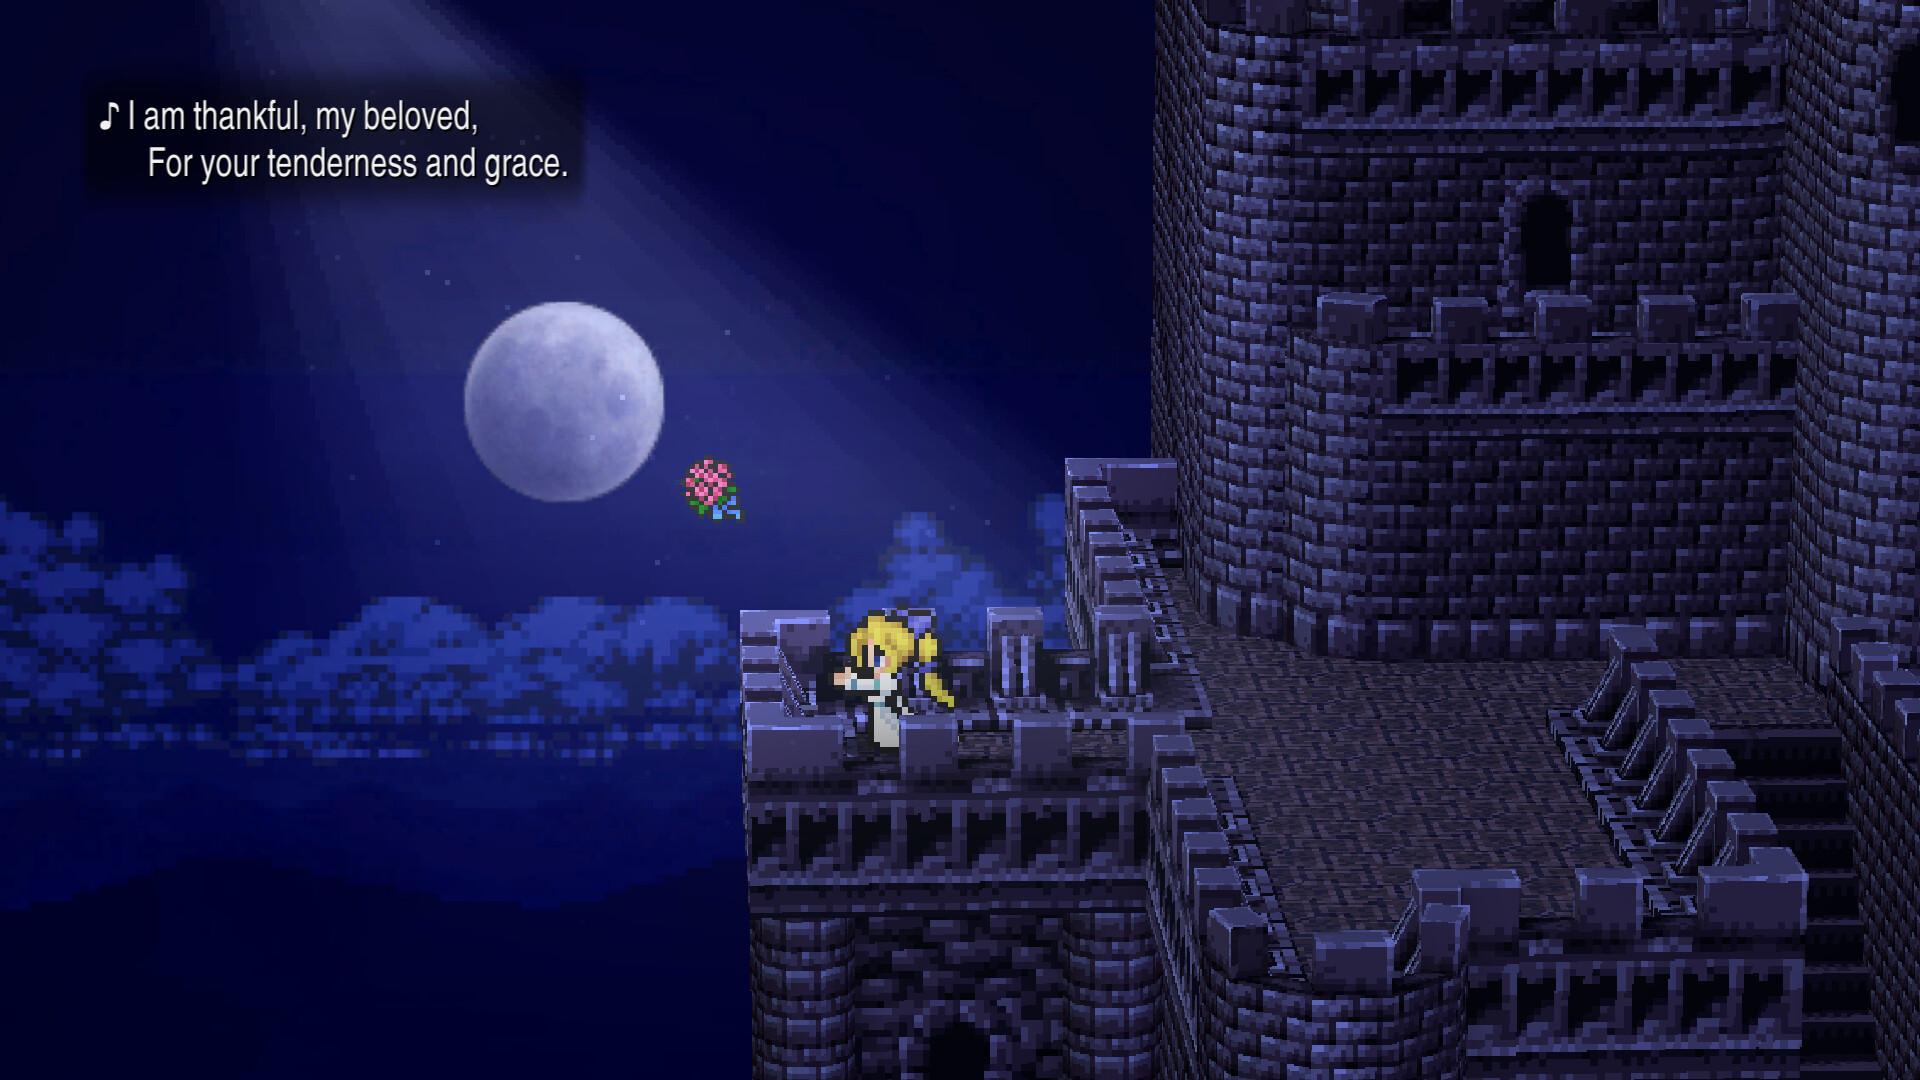 Screenshot №7 from game FINAL FANTASY VI